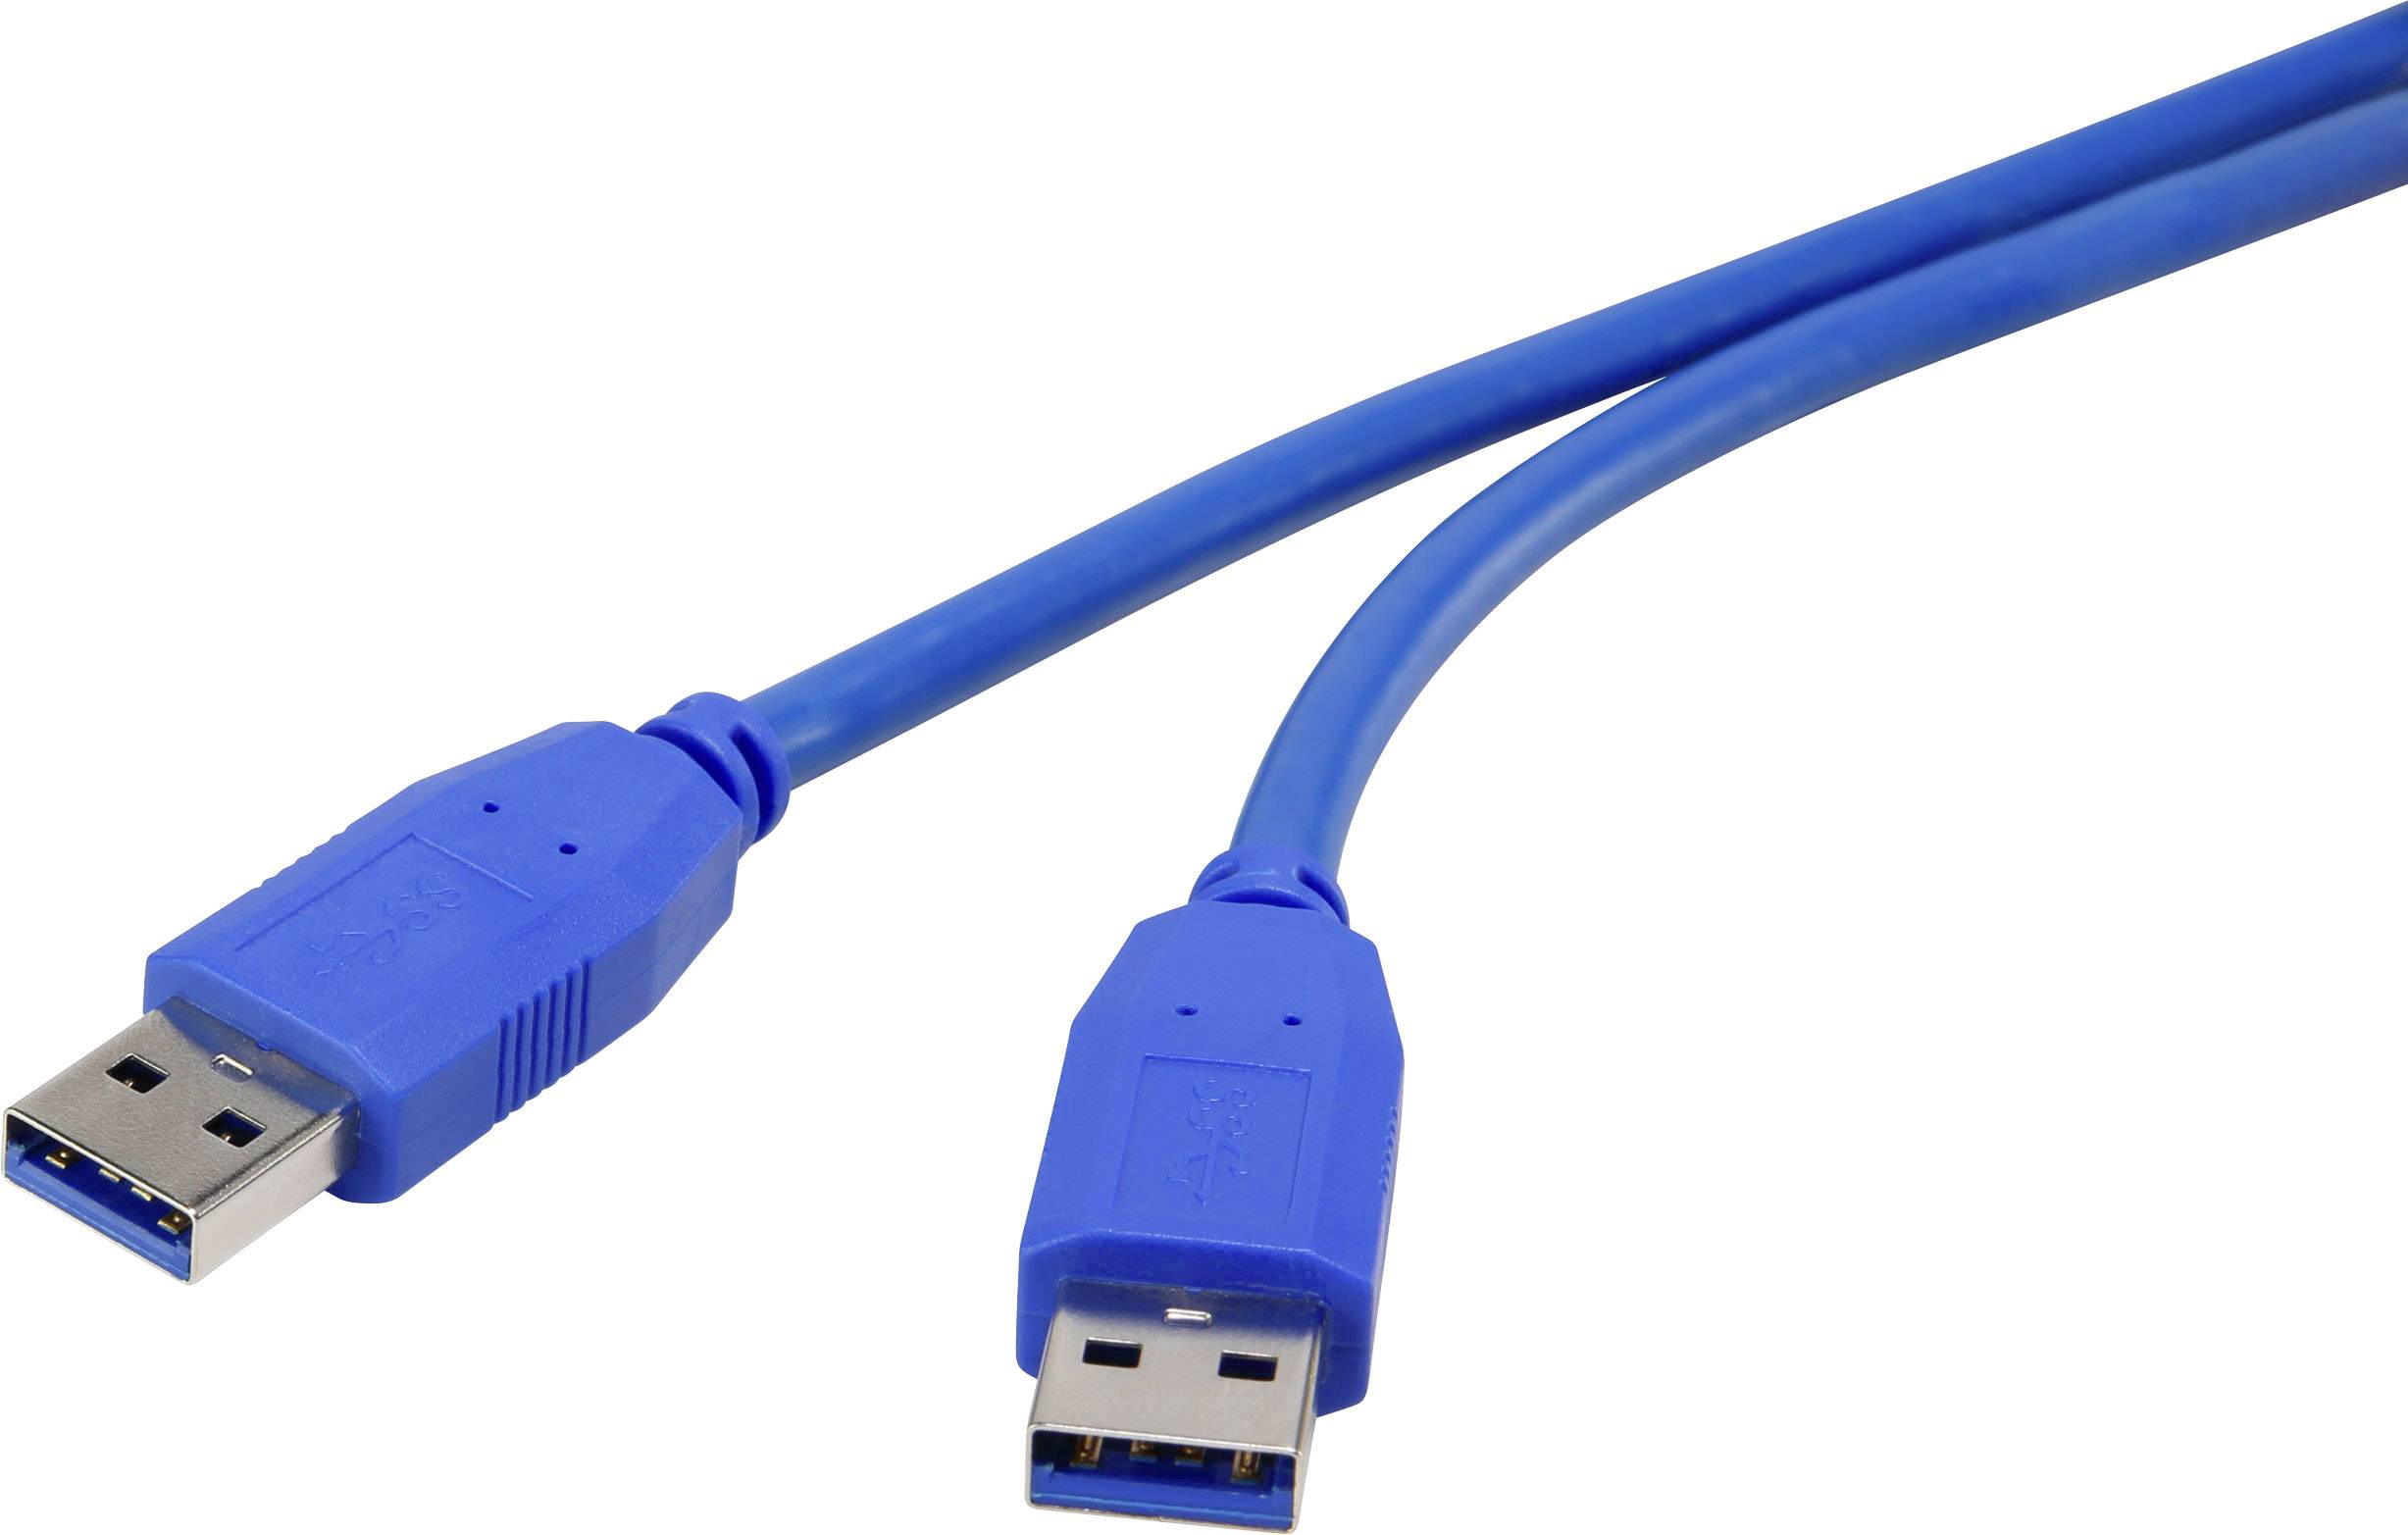 CONRAD Renkforce USB 3.0 Kabel [1x USB 3.0 Stecker A - 1x USB 3.0 Stecker A] 0.5 m Blau vergoldete S